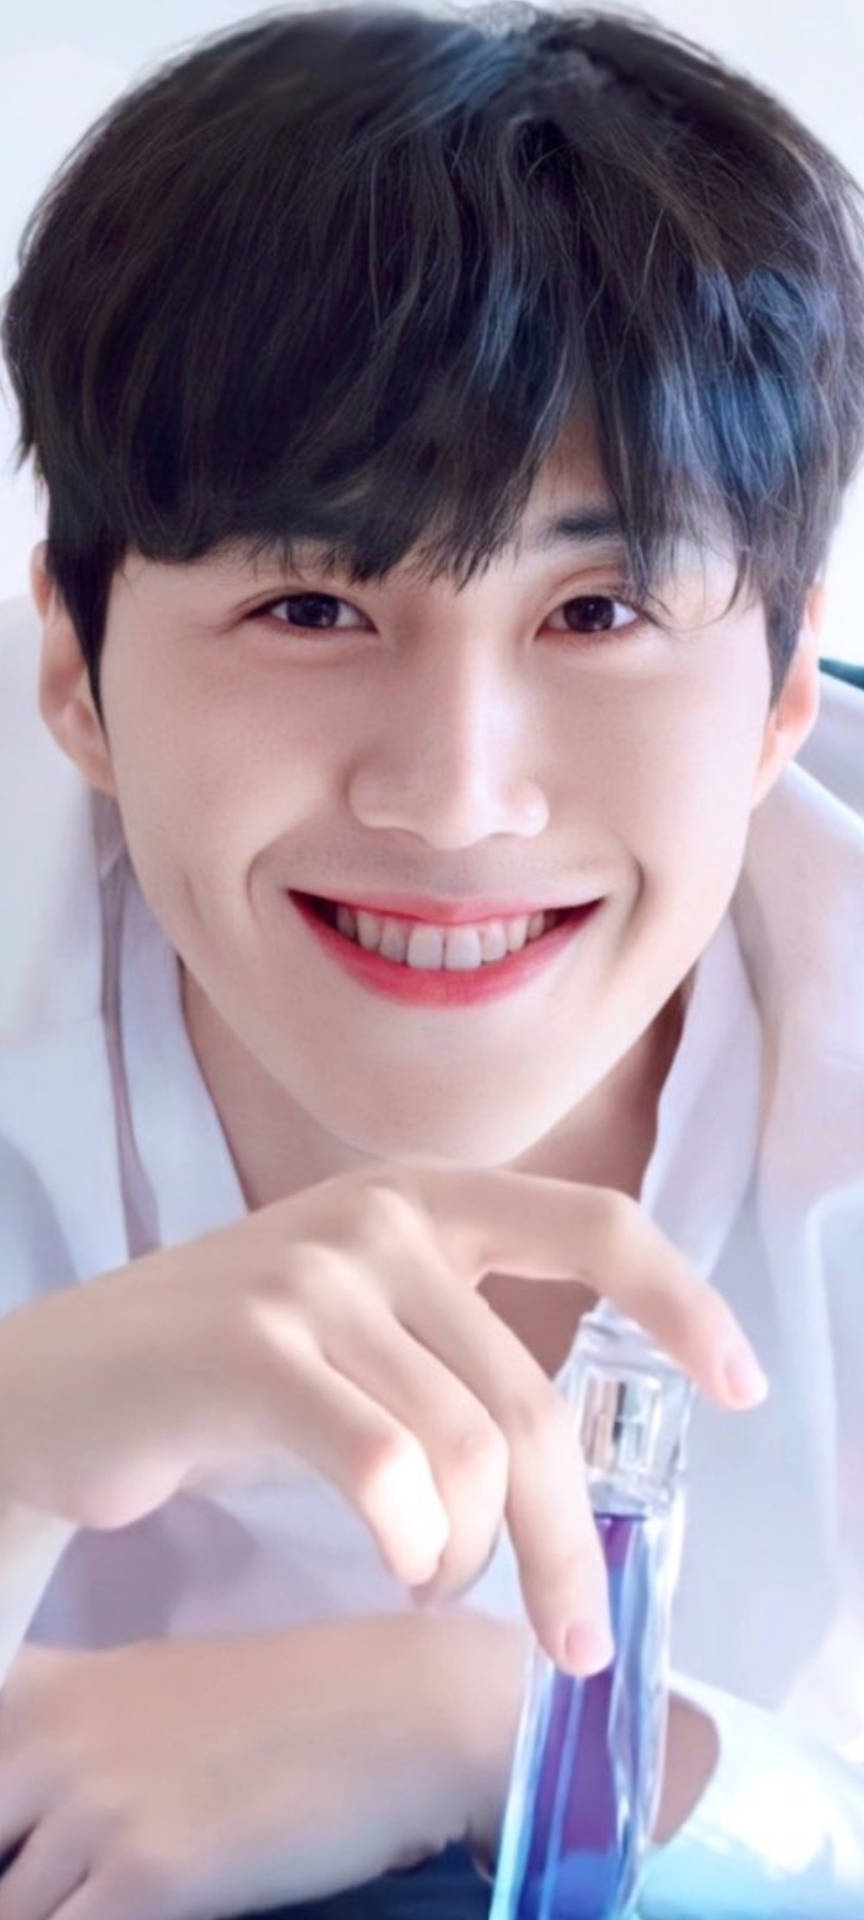 Kim Seon Ho Dimple Smile Background